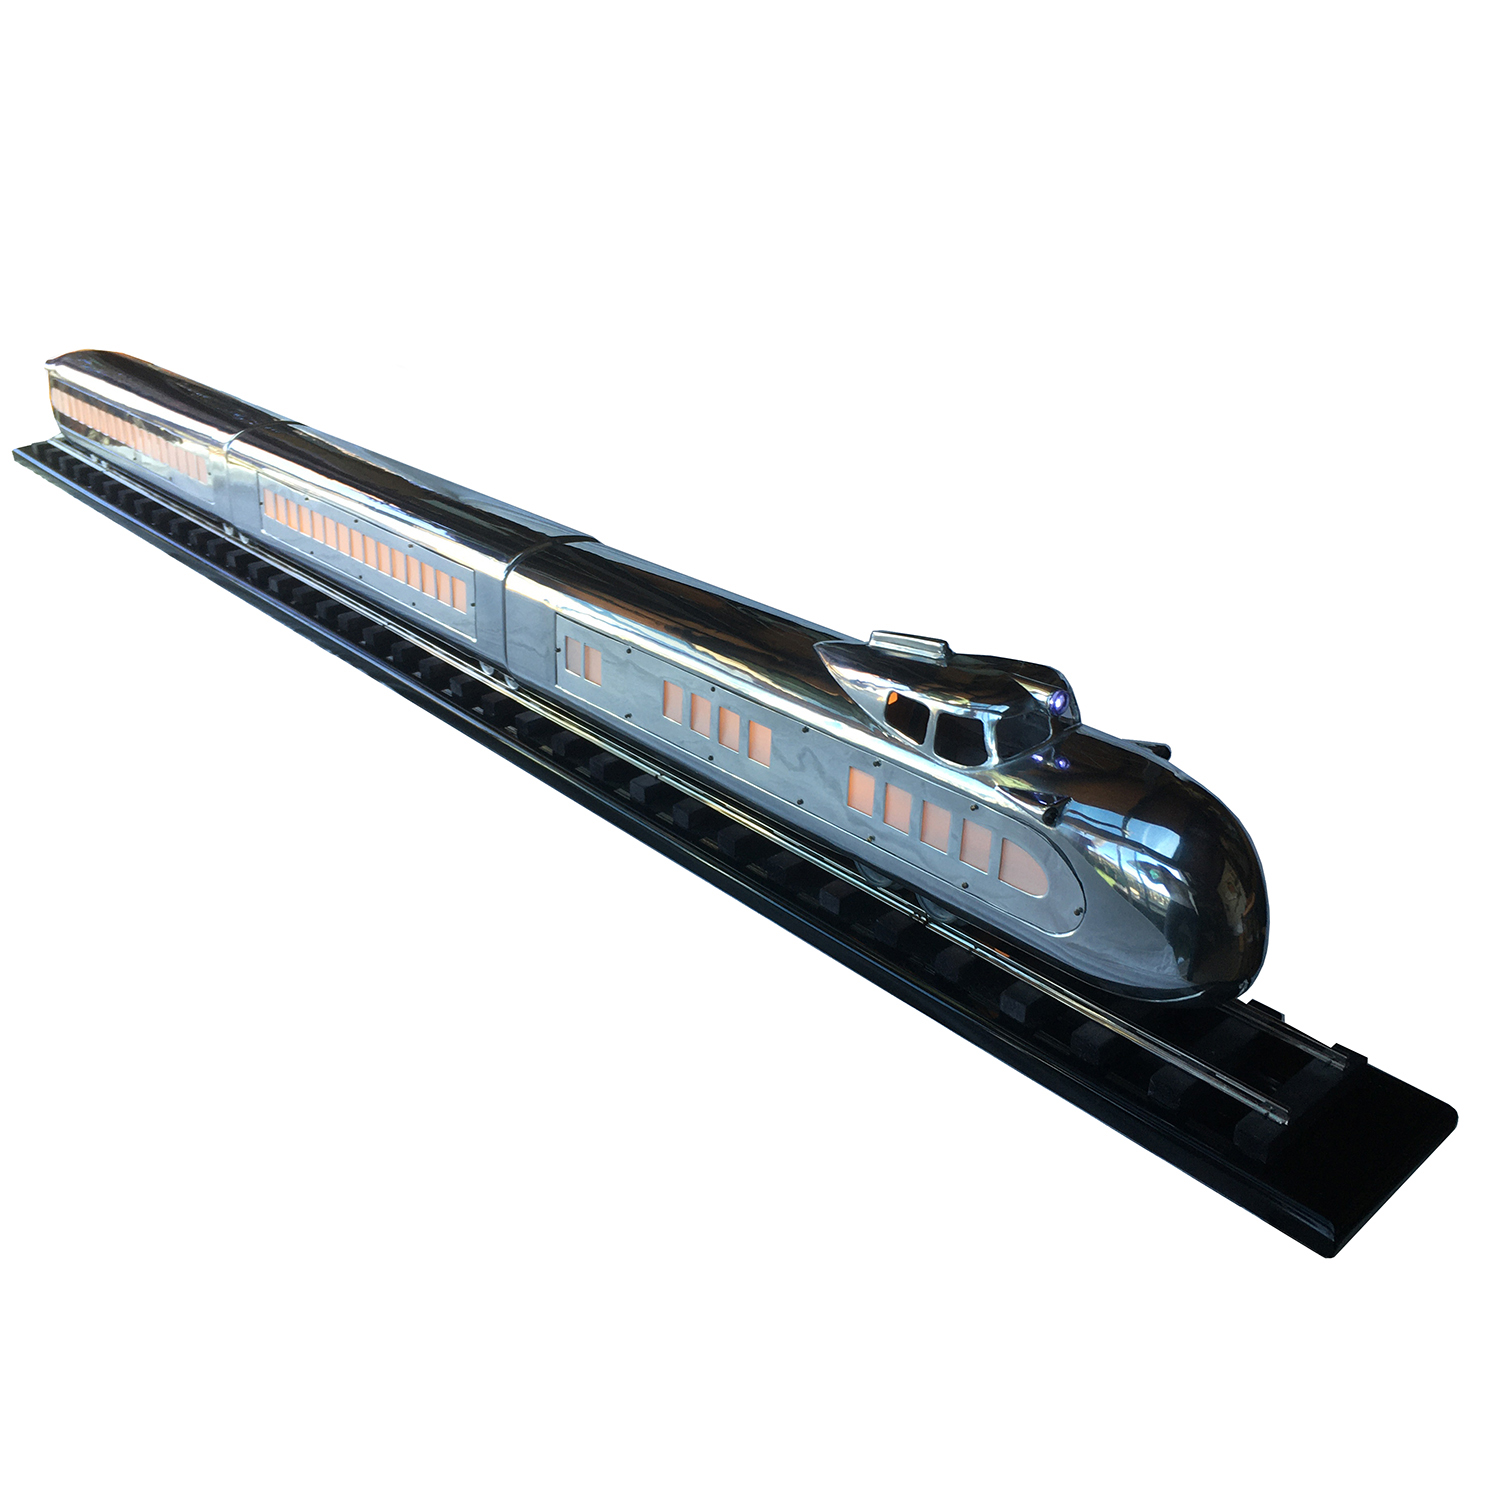 Art Deco Streamline Train Model - Standard Gauge - 6 ft - Off The